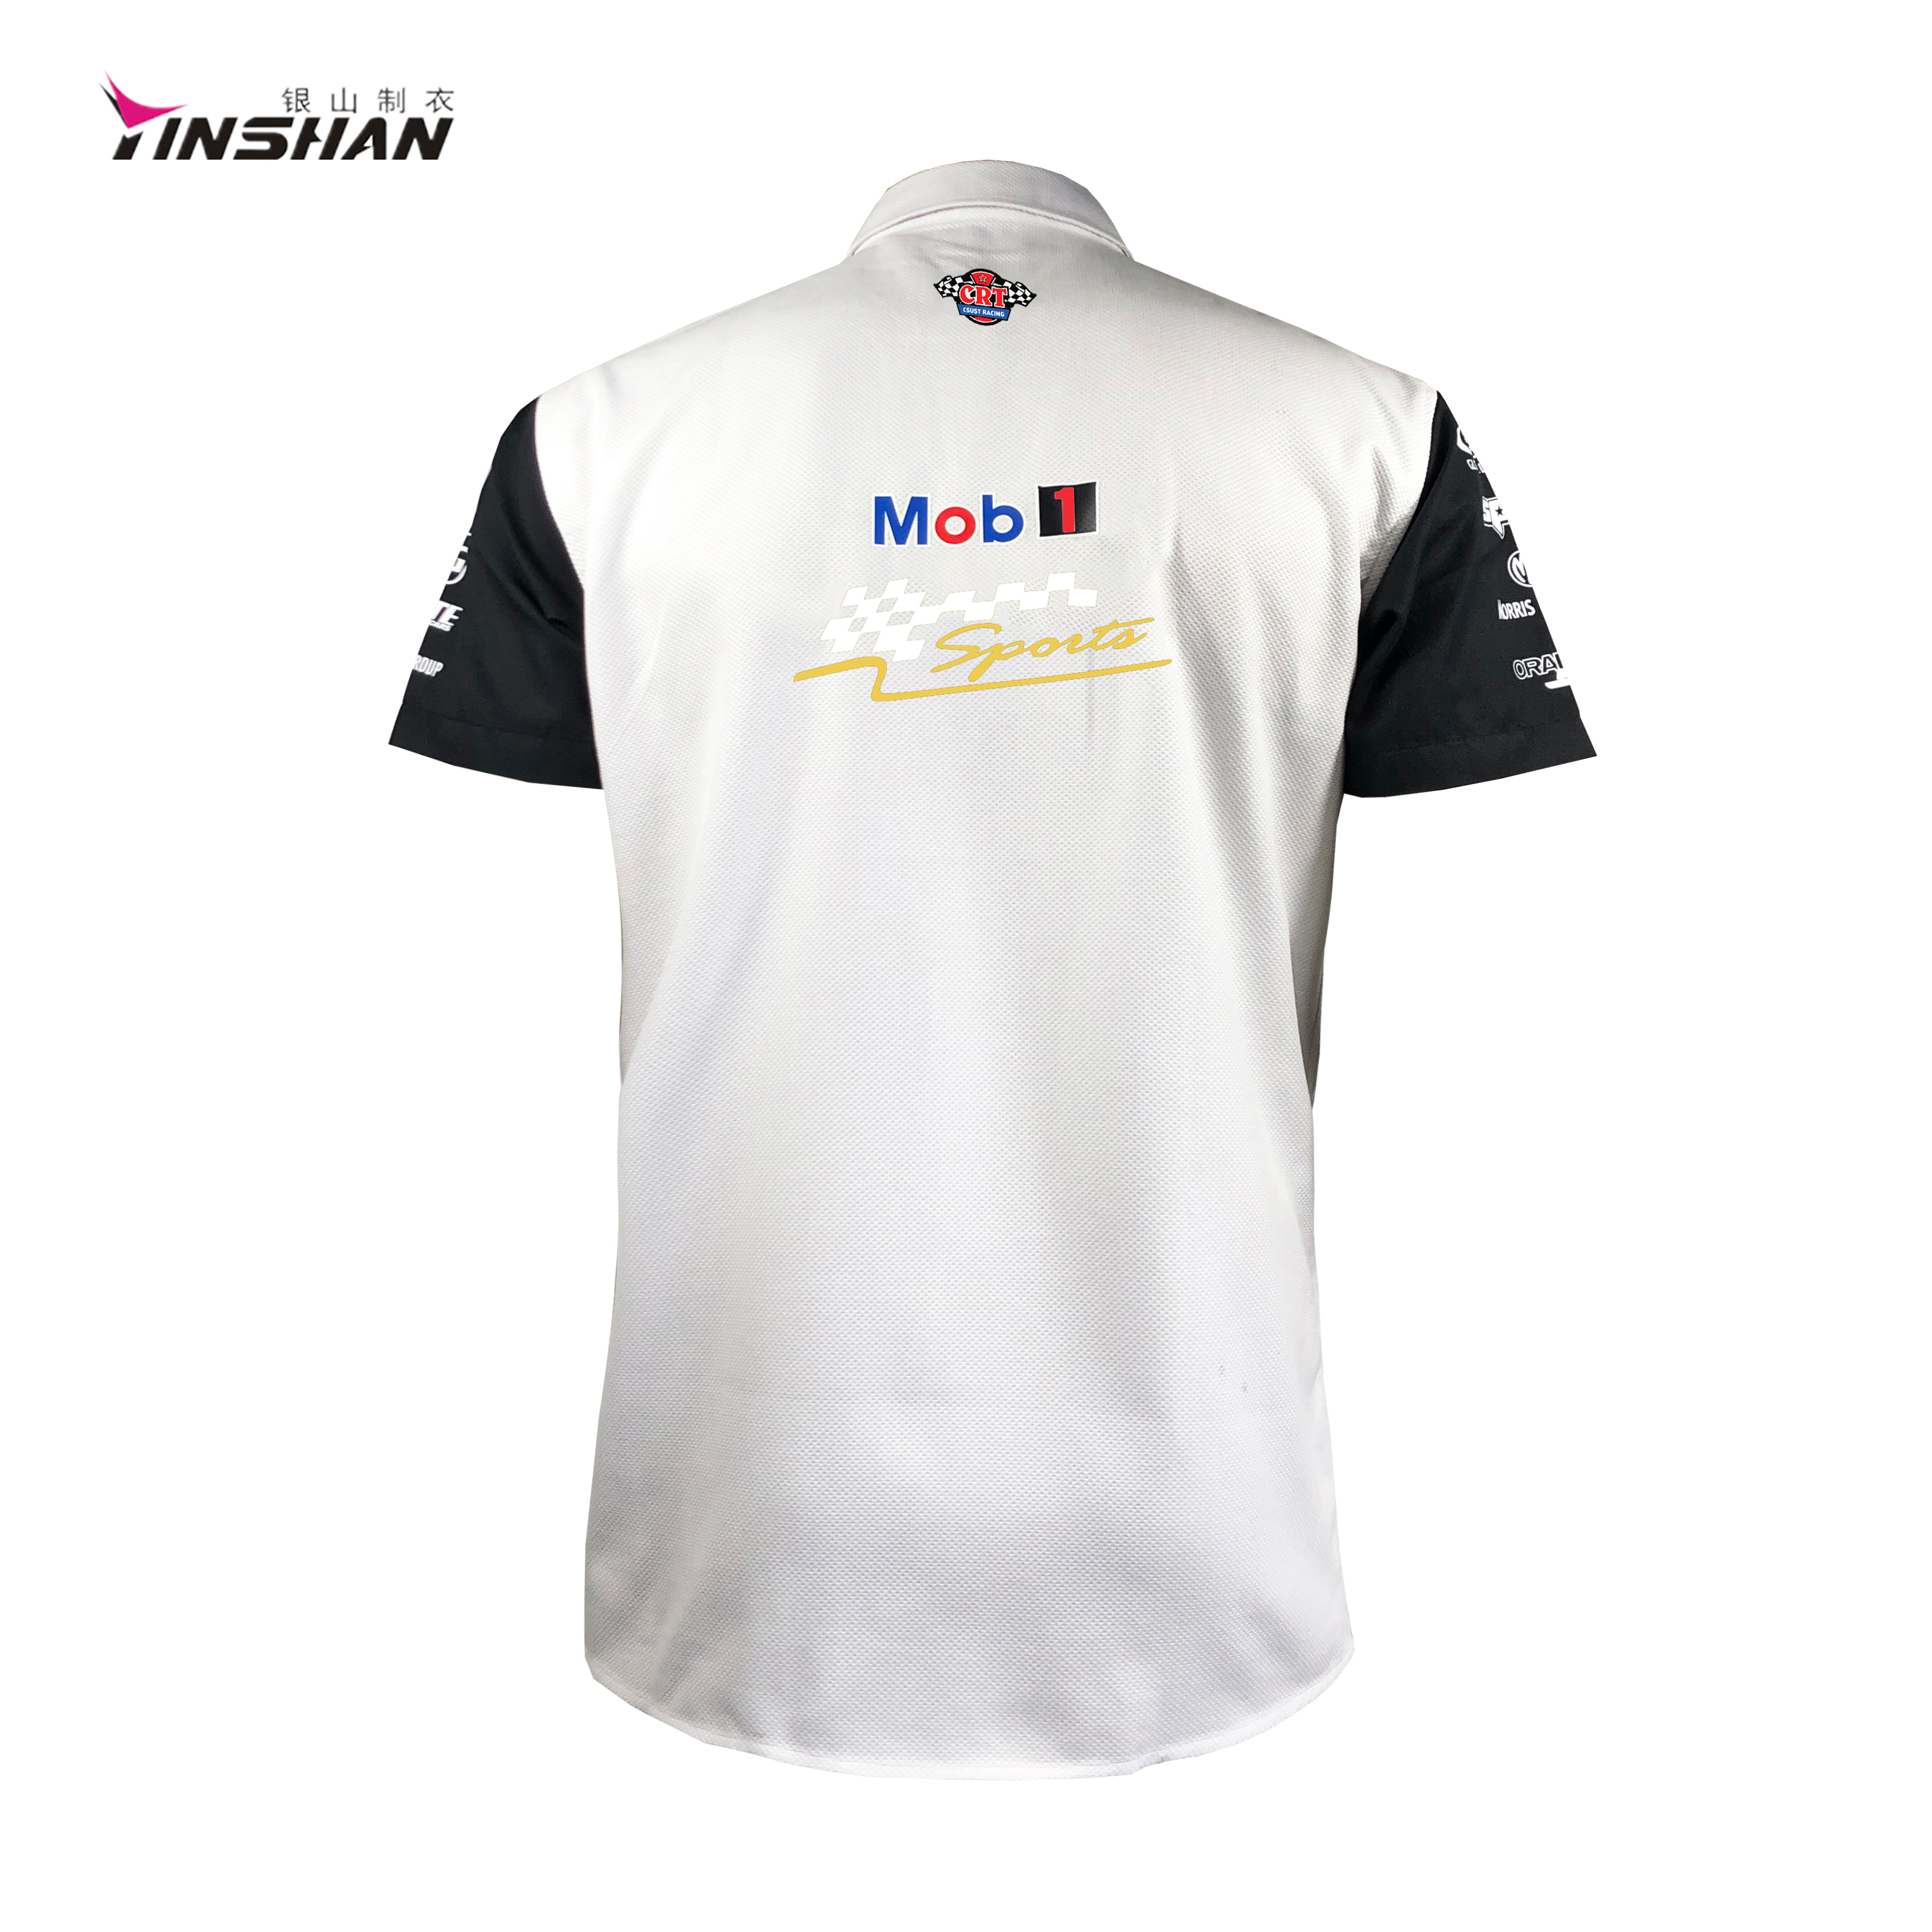 Customized Logo Design Cotton Sports Shirt with Artwork Printing 1B